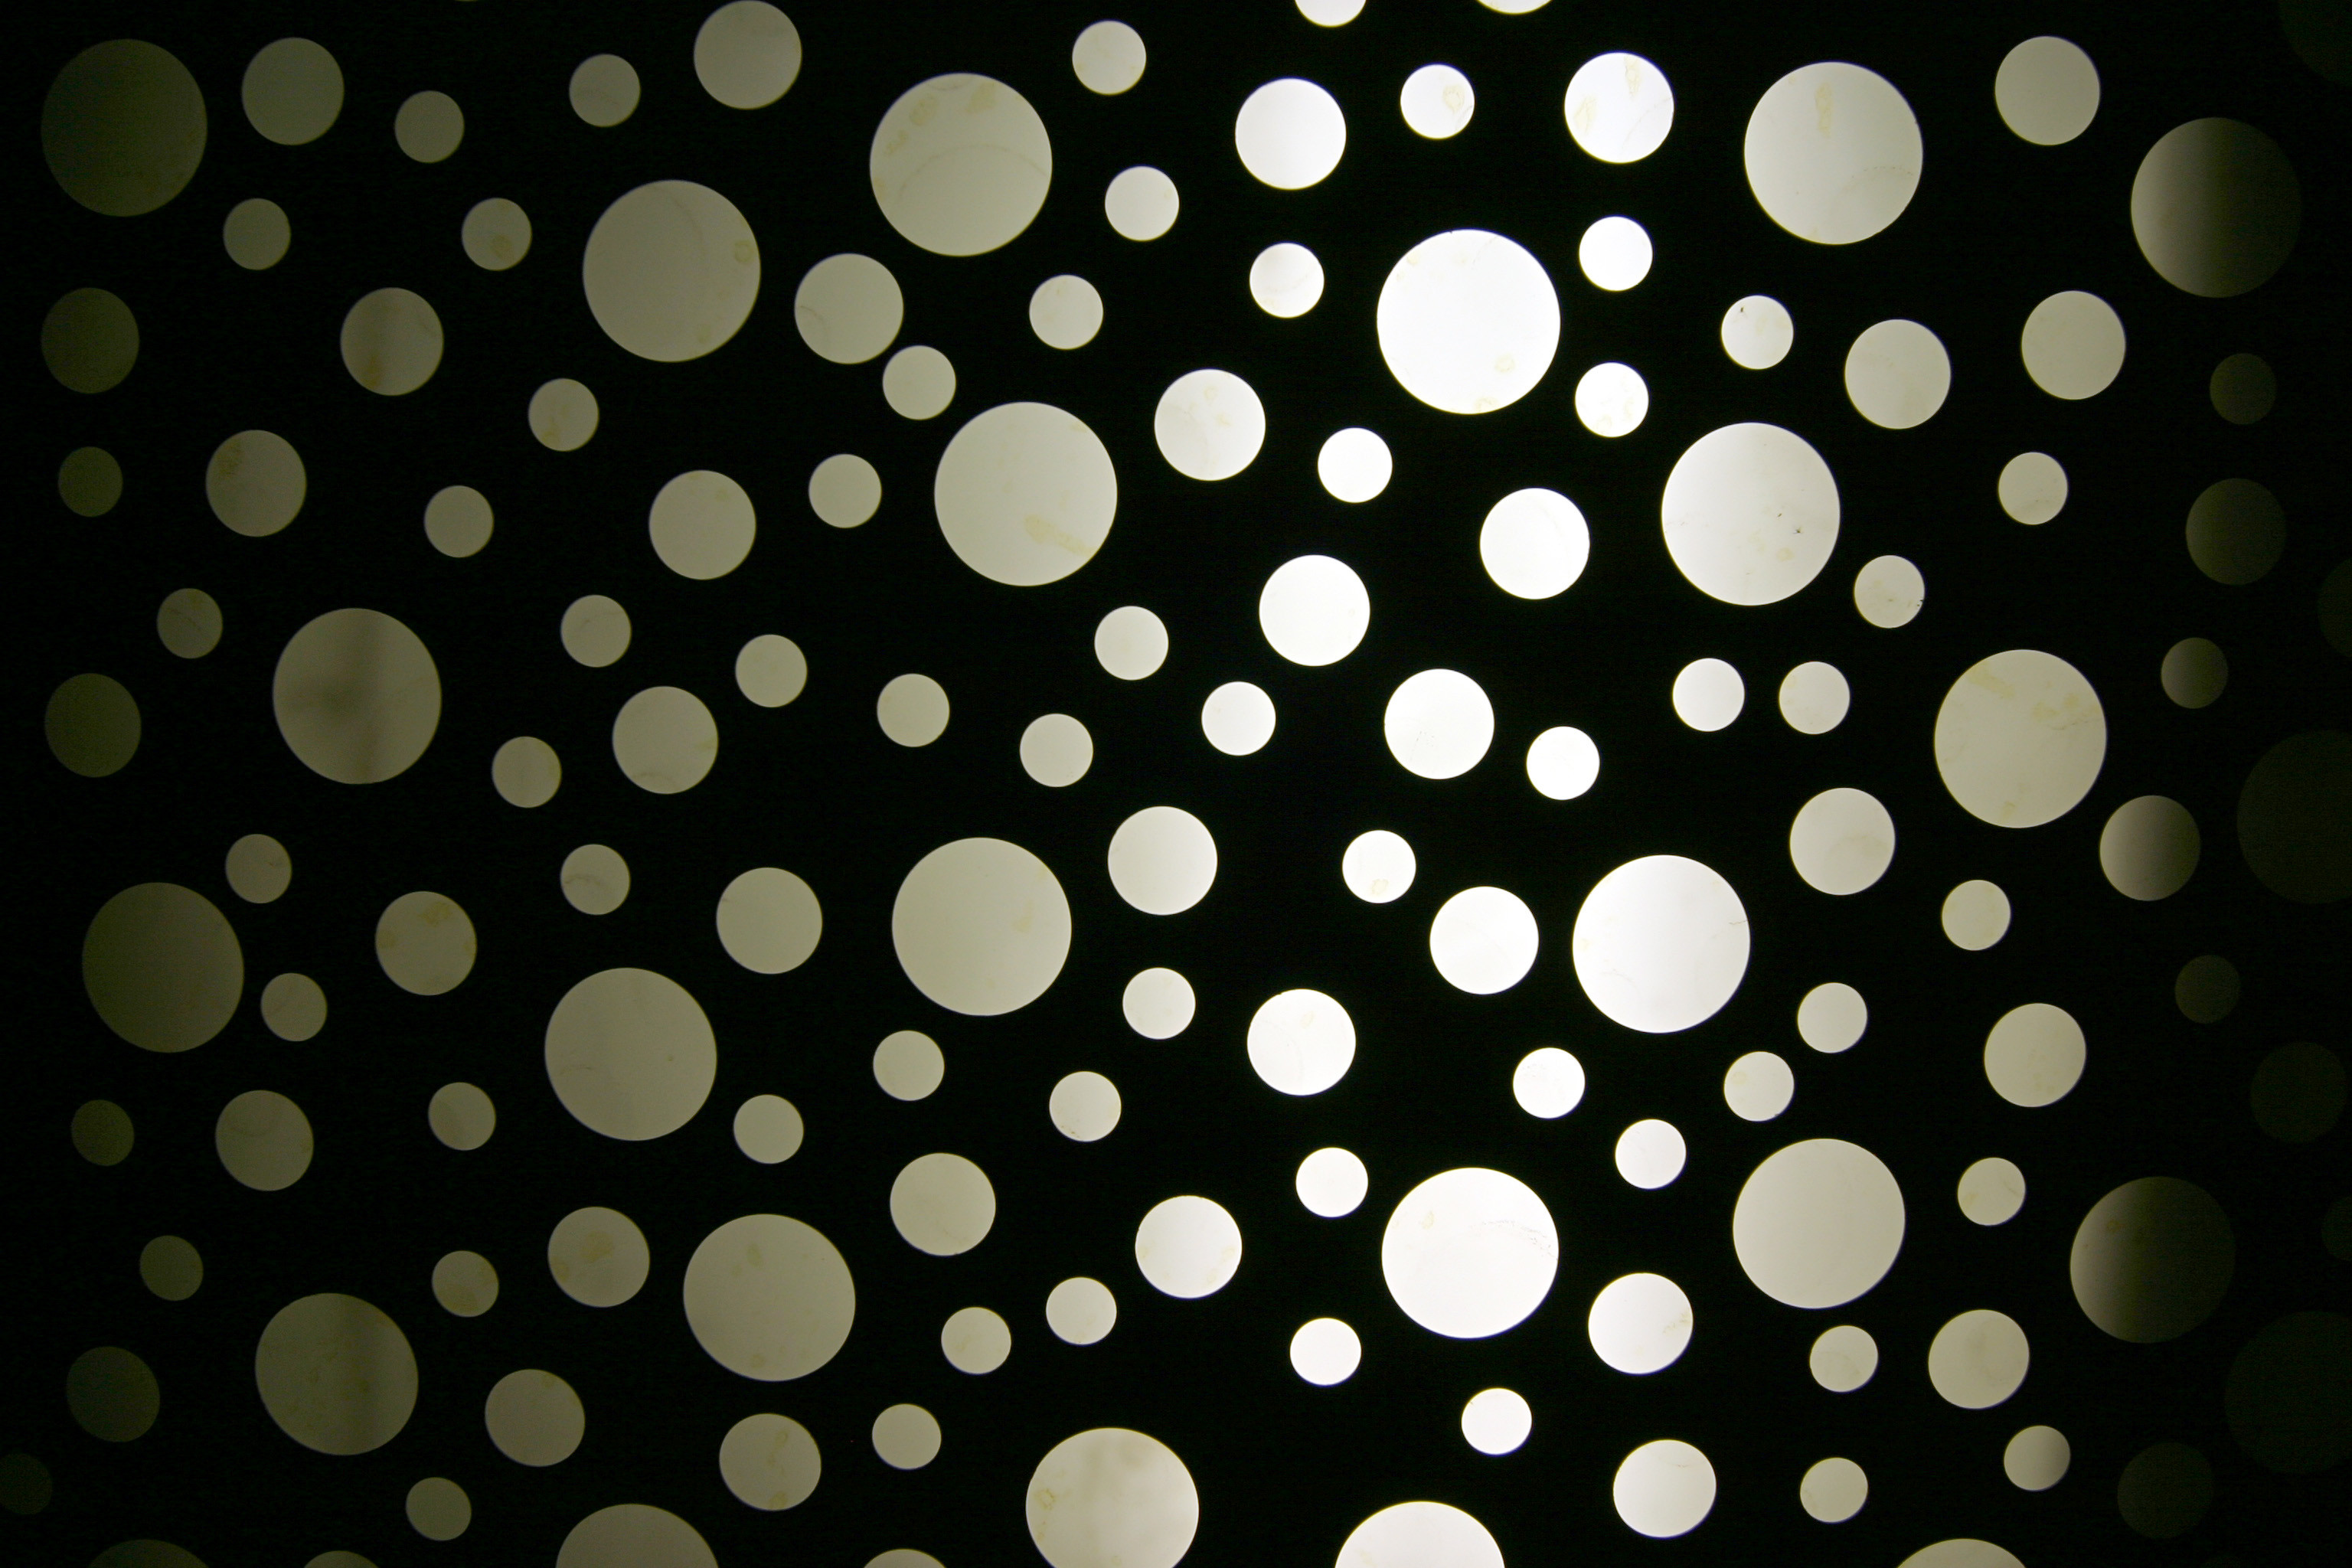 3072x2048 HD Polka Dot Wallpaper - WallpaperSafari